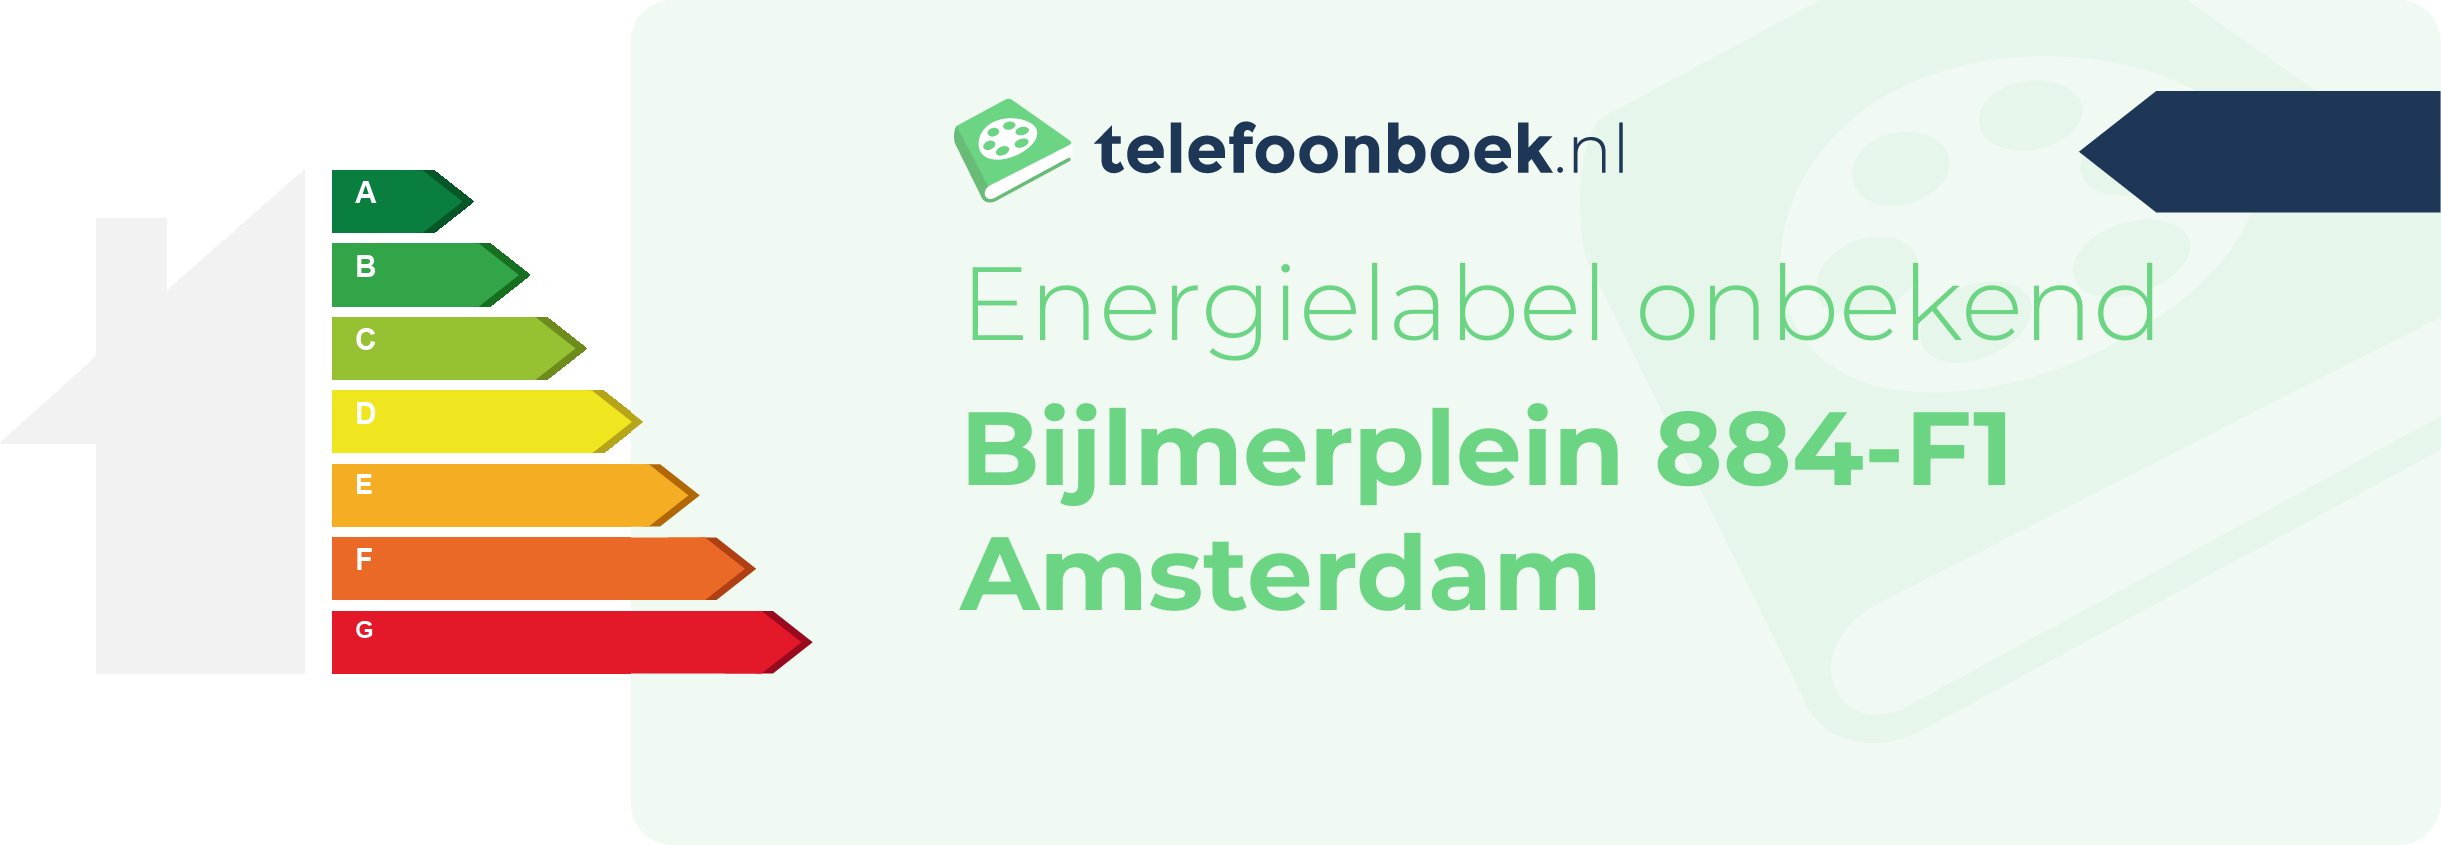 Energielabel Bijlmerplein 884-F1 Amsterdam